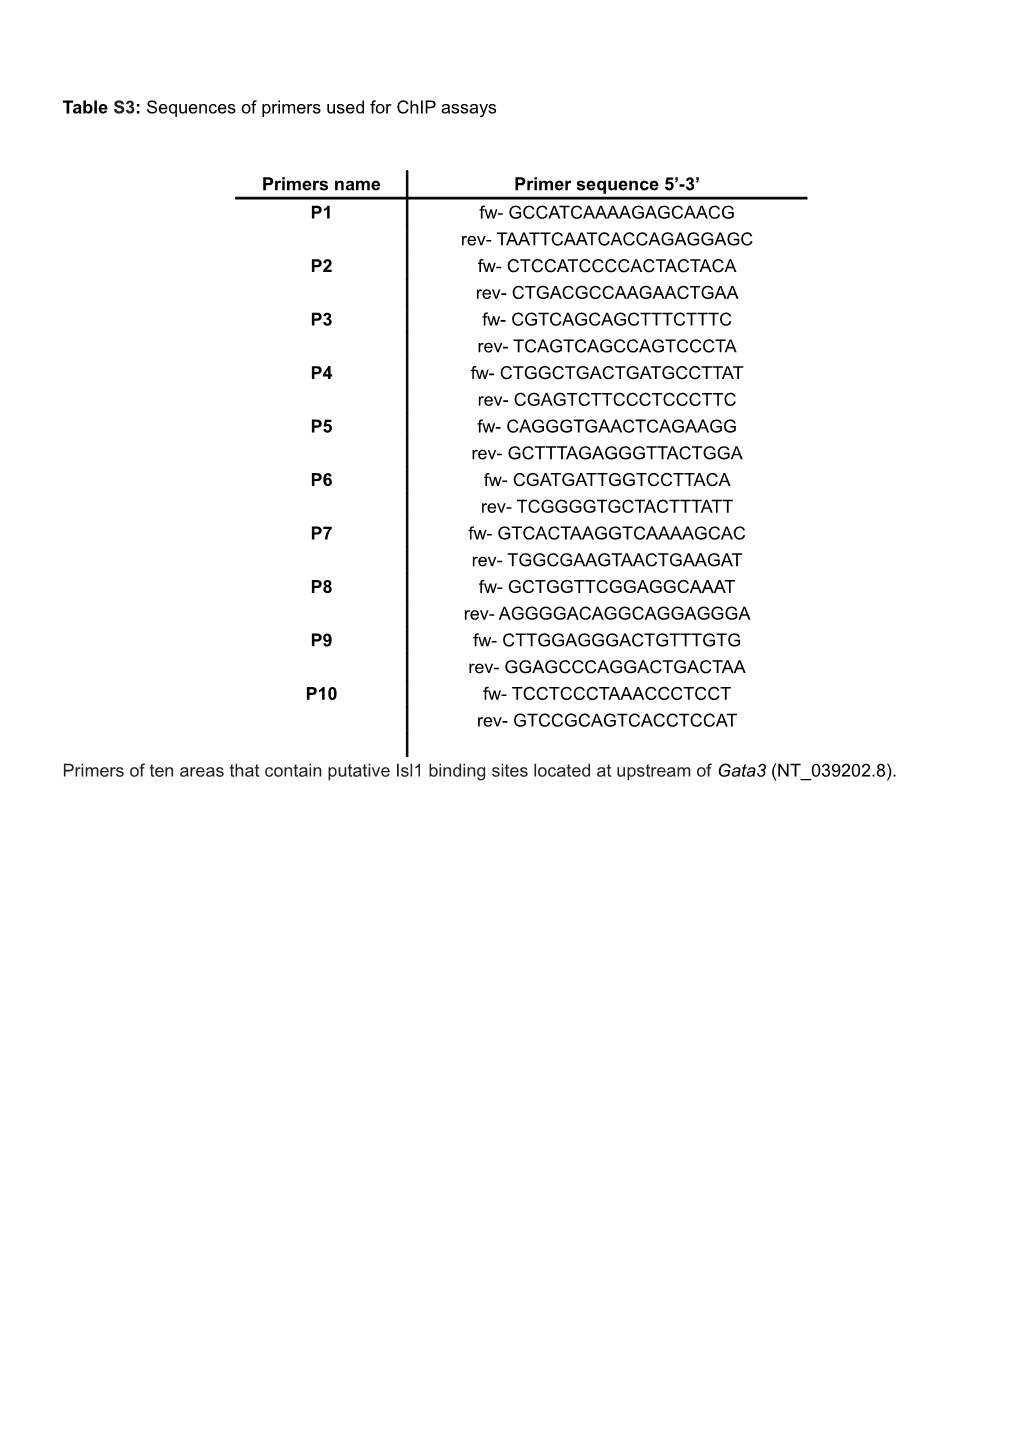 Table S1:Sequences of Primers for PCR, Semi-Quantitative PCR and RT-Qpcr